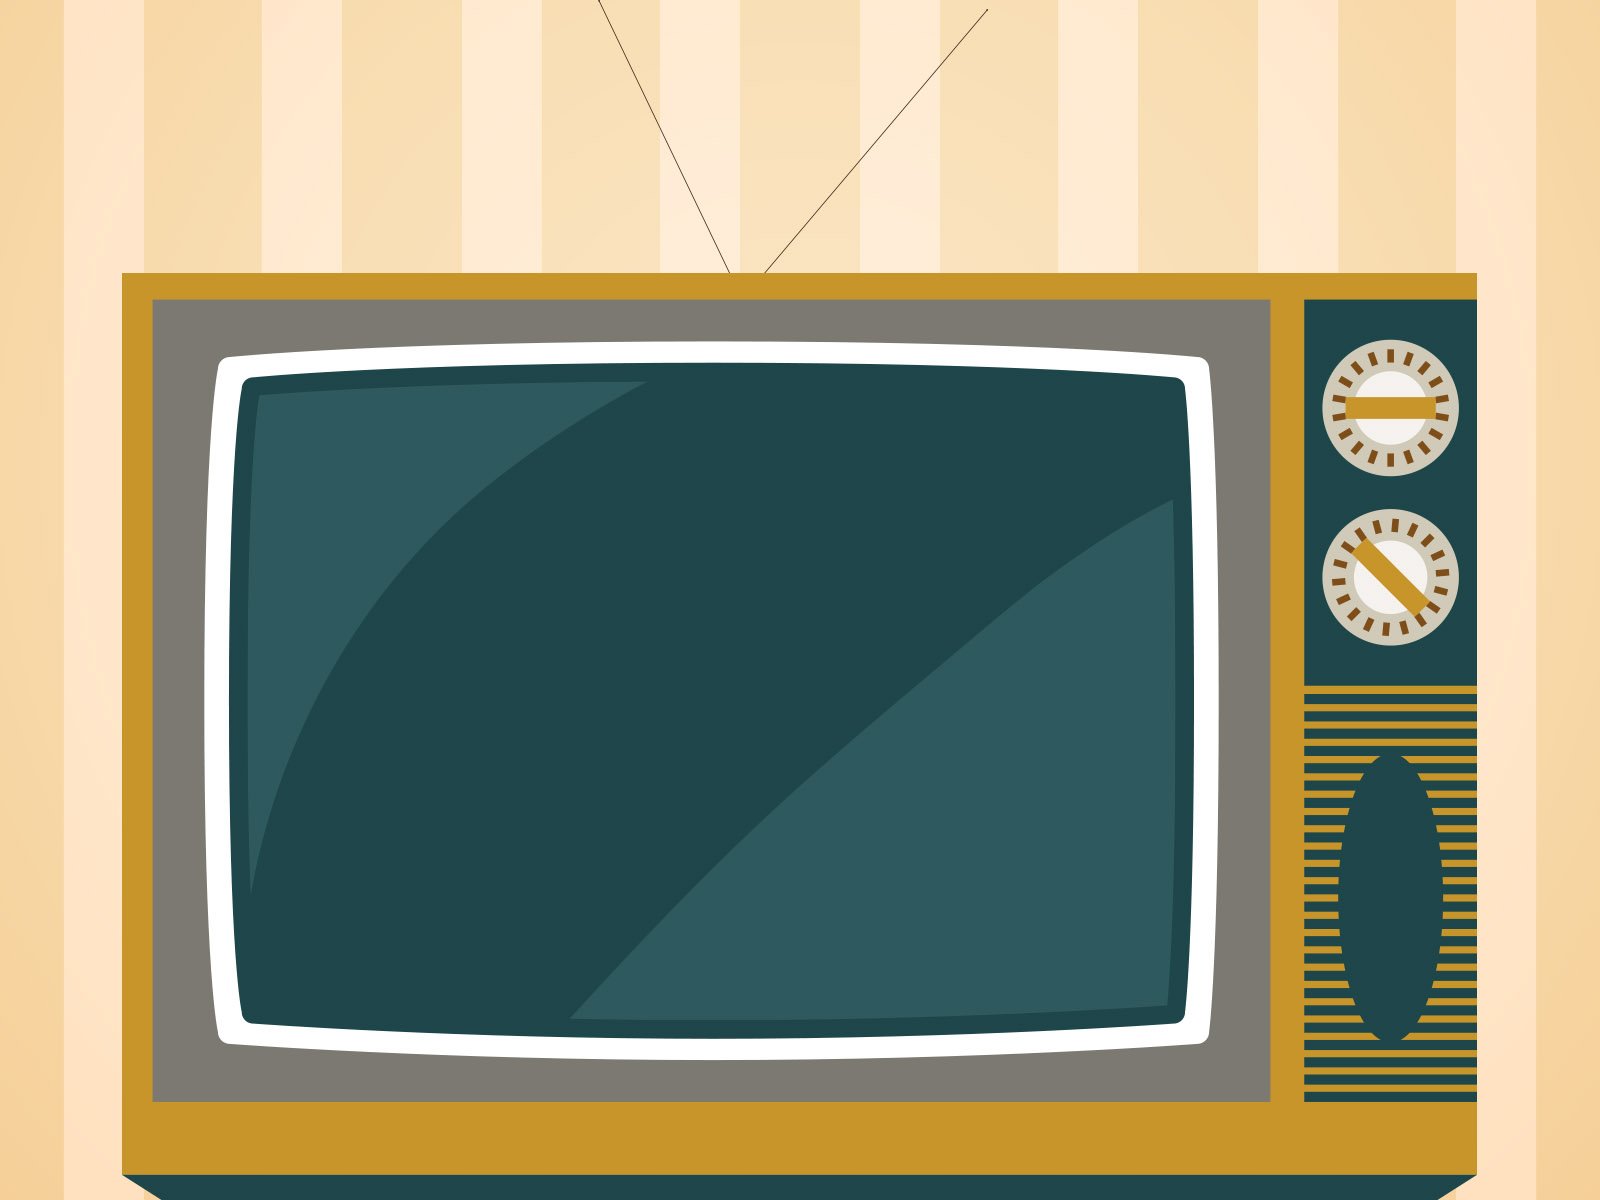 Картинка телевизора с изображением